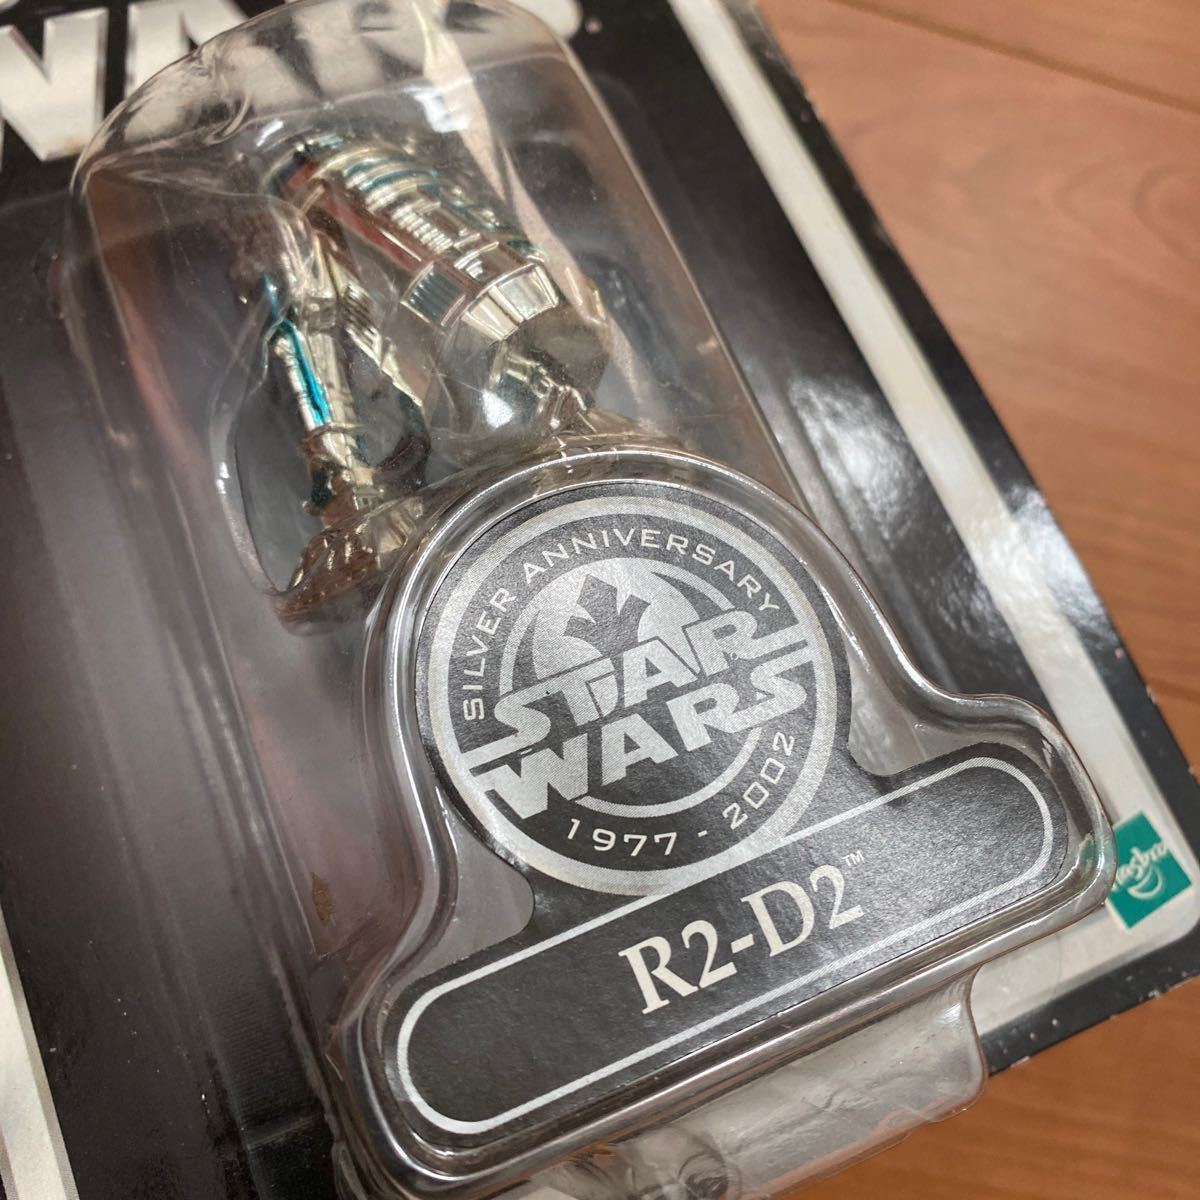  - sbro Звездные войны серебряный R2-D2 action фигурка 1977-2002 25 anniversary commemoration STAR WARS SILVER ANNIVERSARY игрушка Toy America 